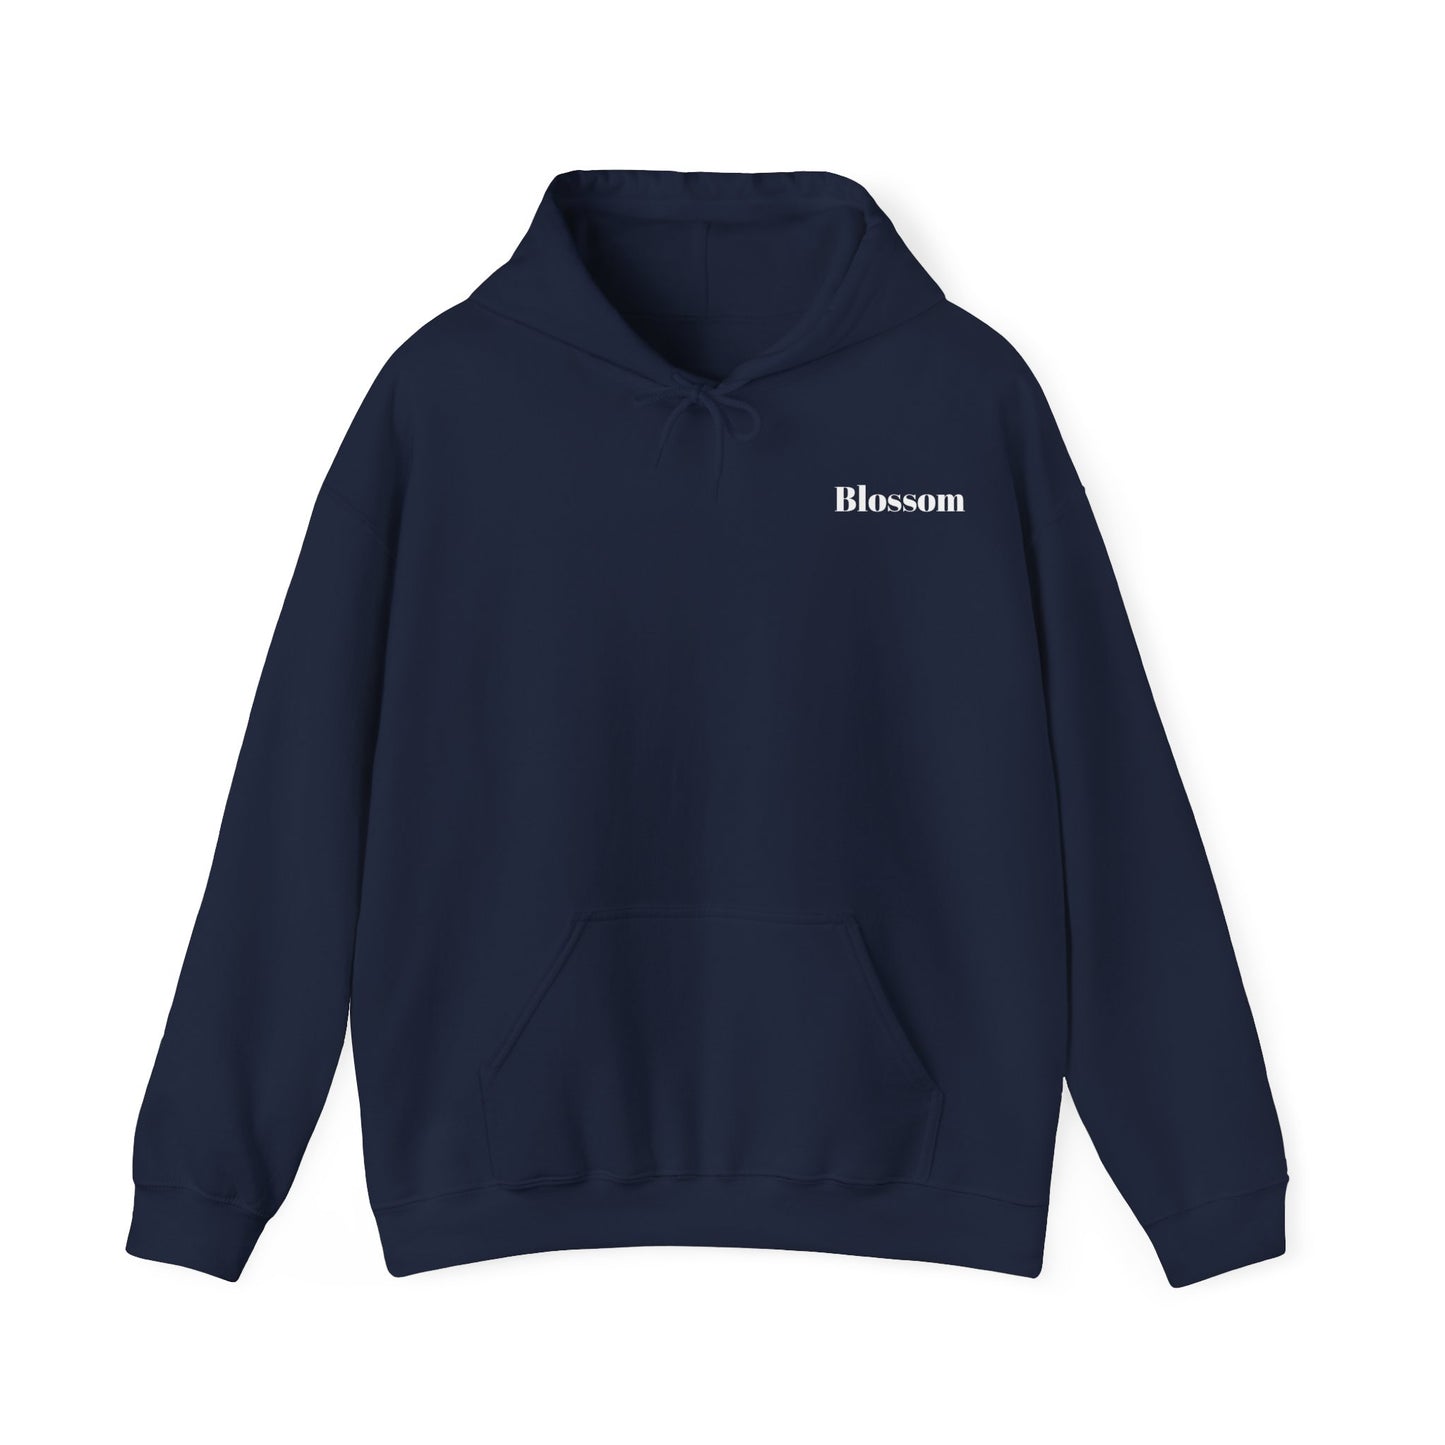 Blossom Unisex Hooded Sweatshirt with Heavy Blend Fabric11